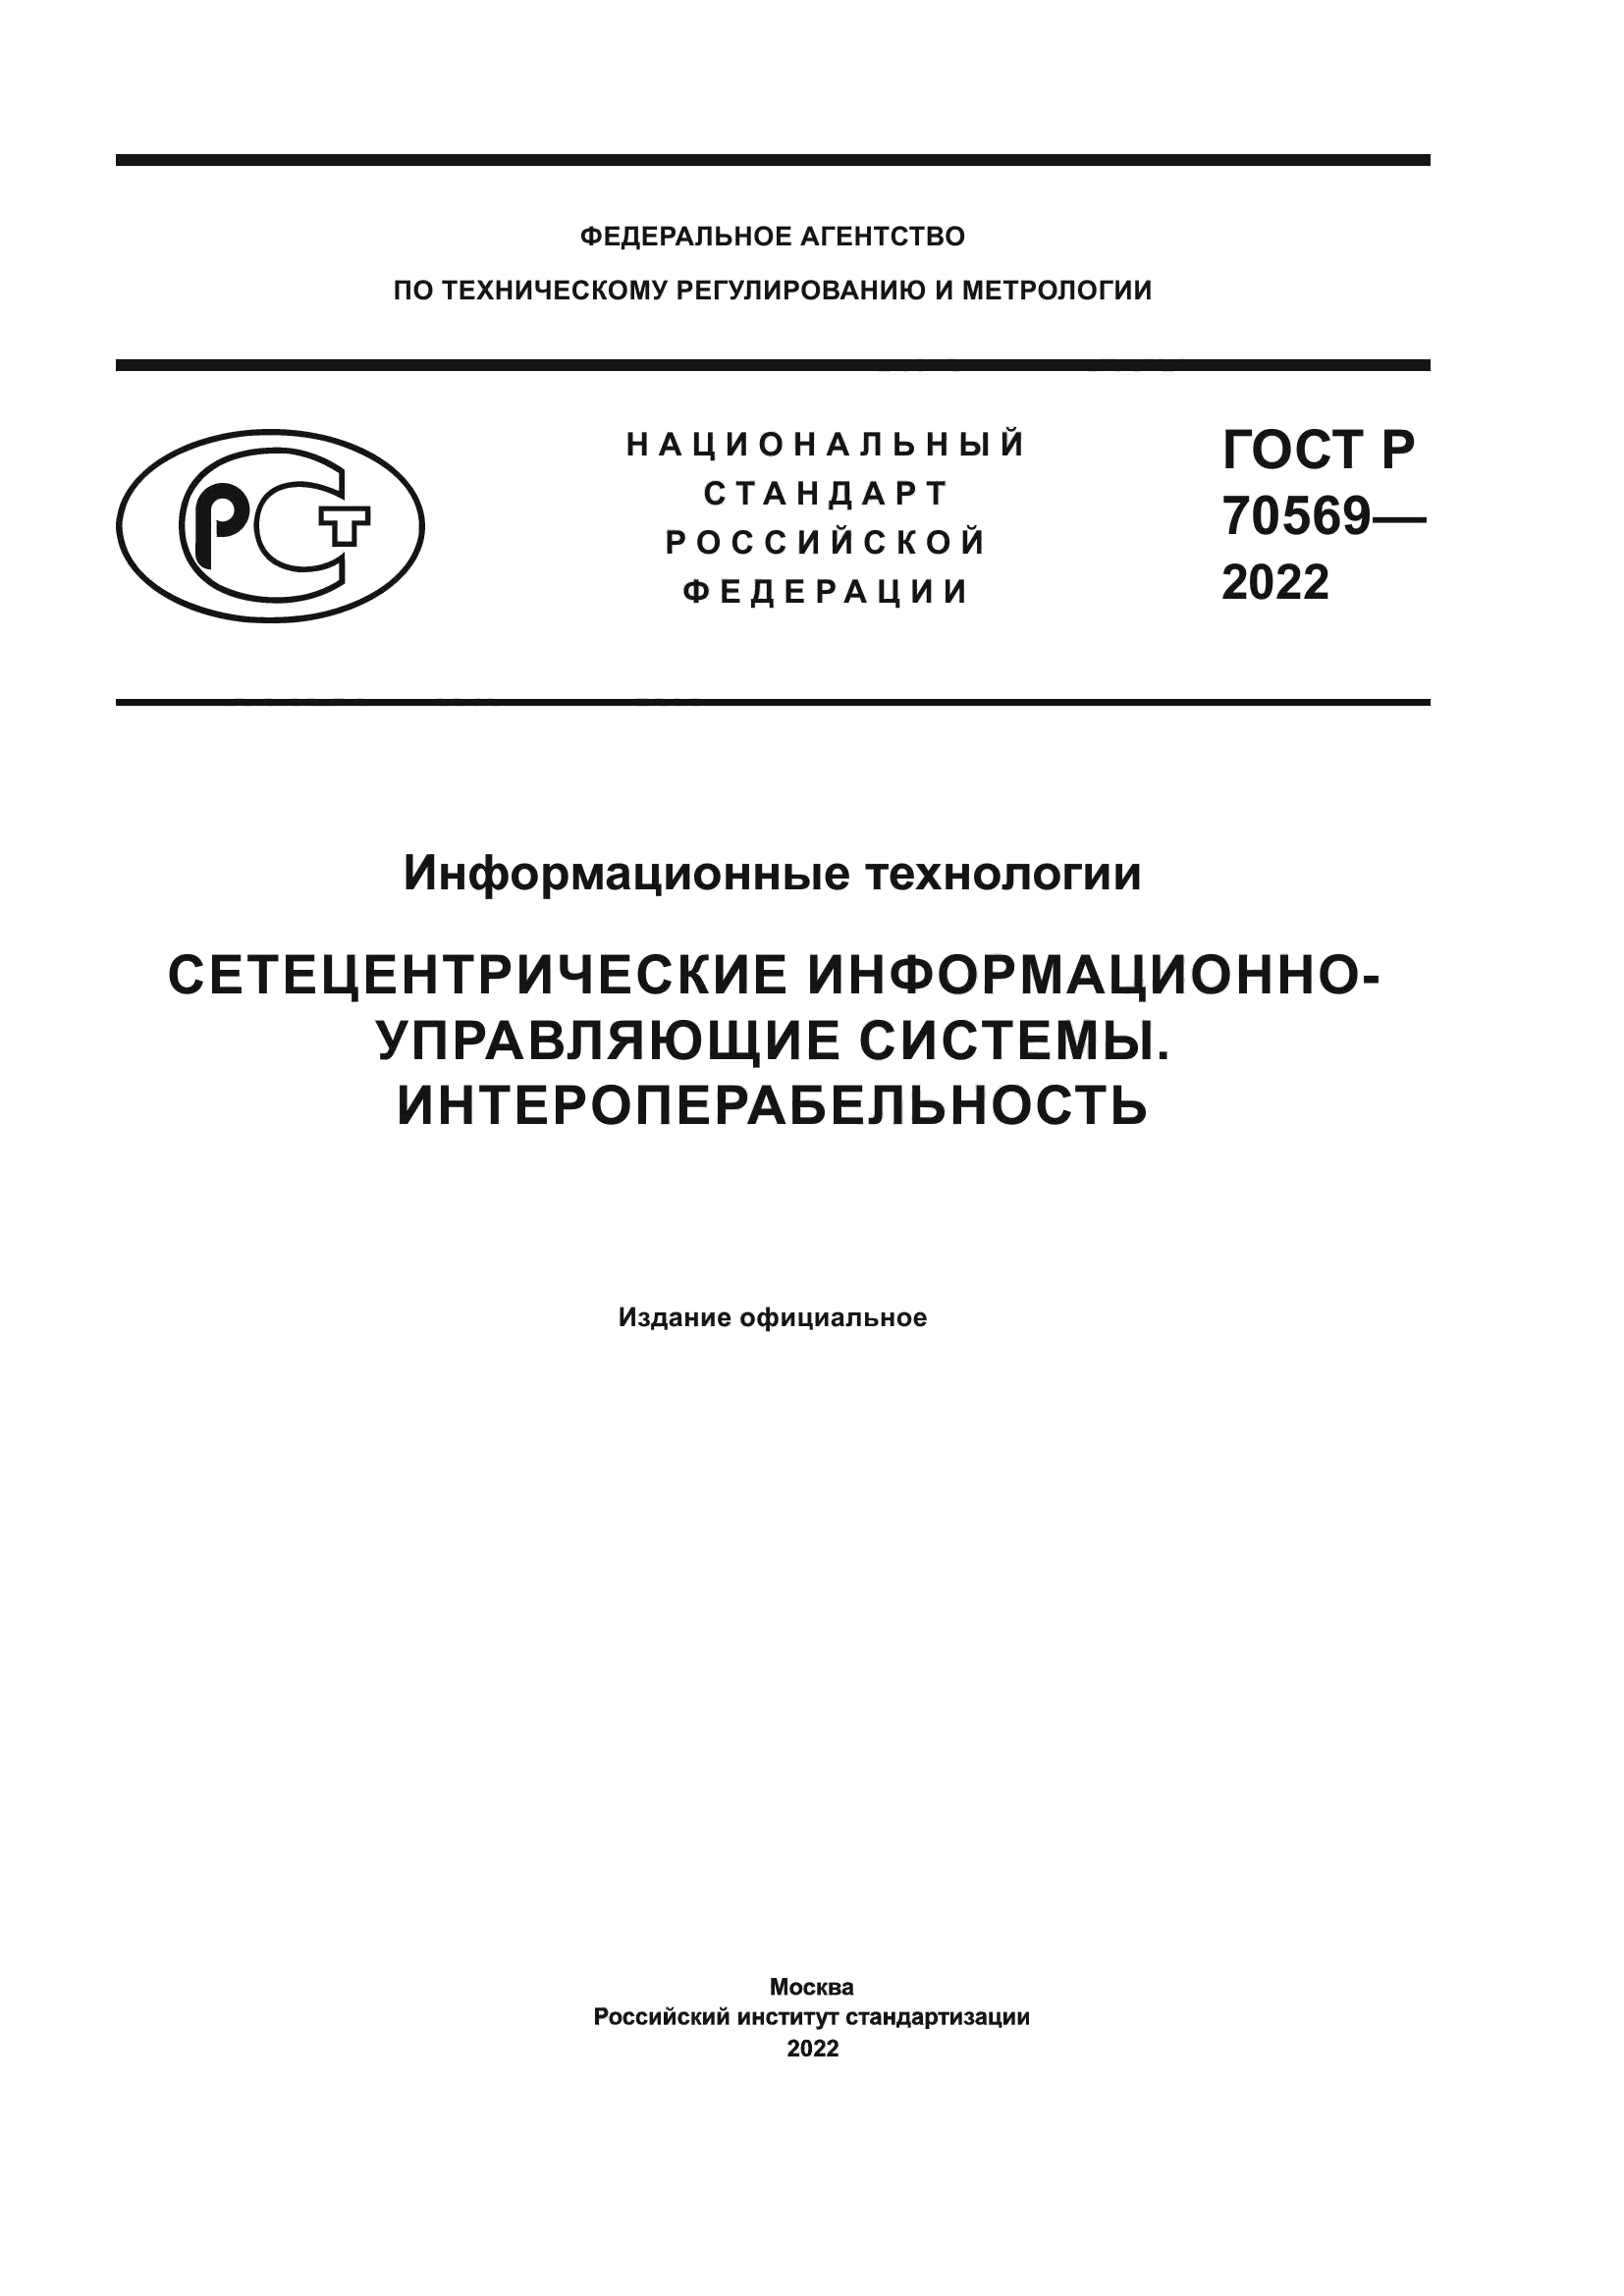 ГОСТ Р 70569-2022